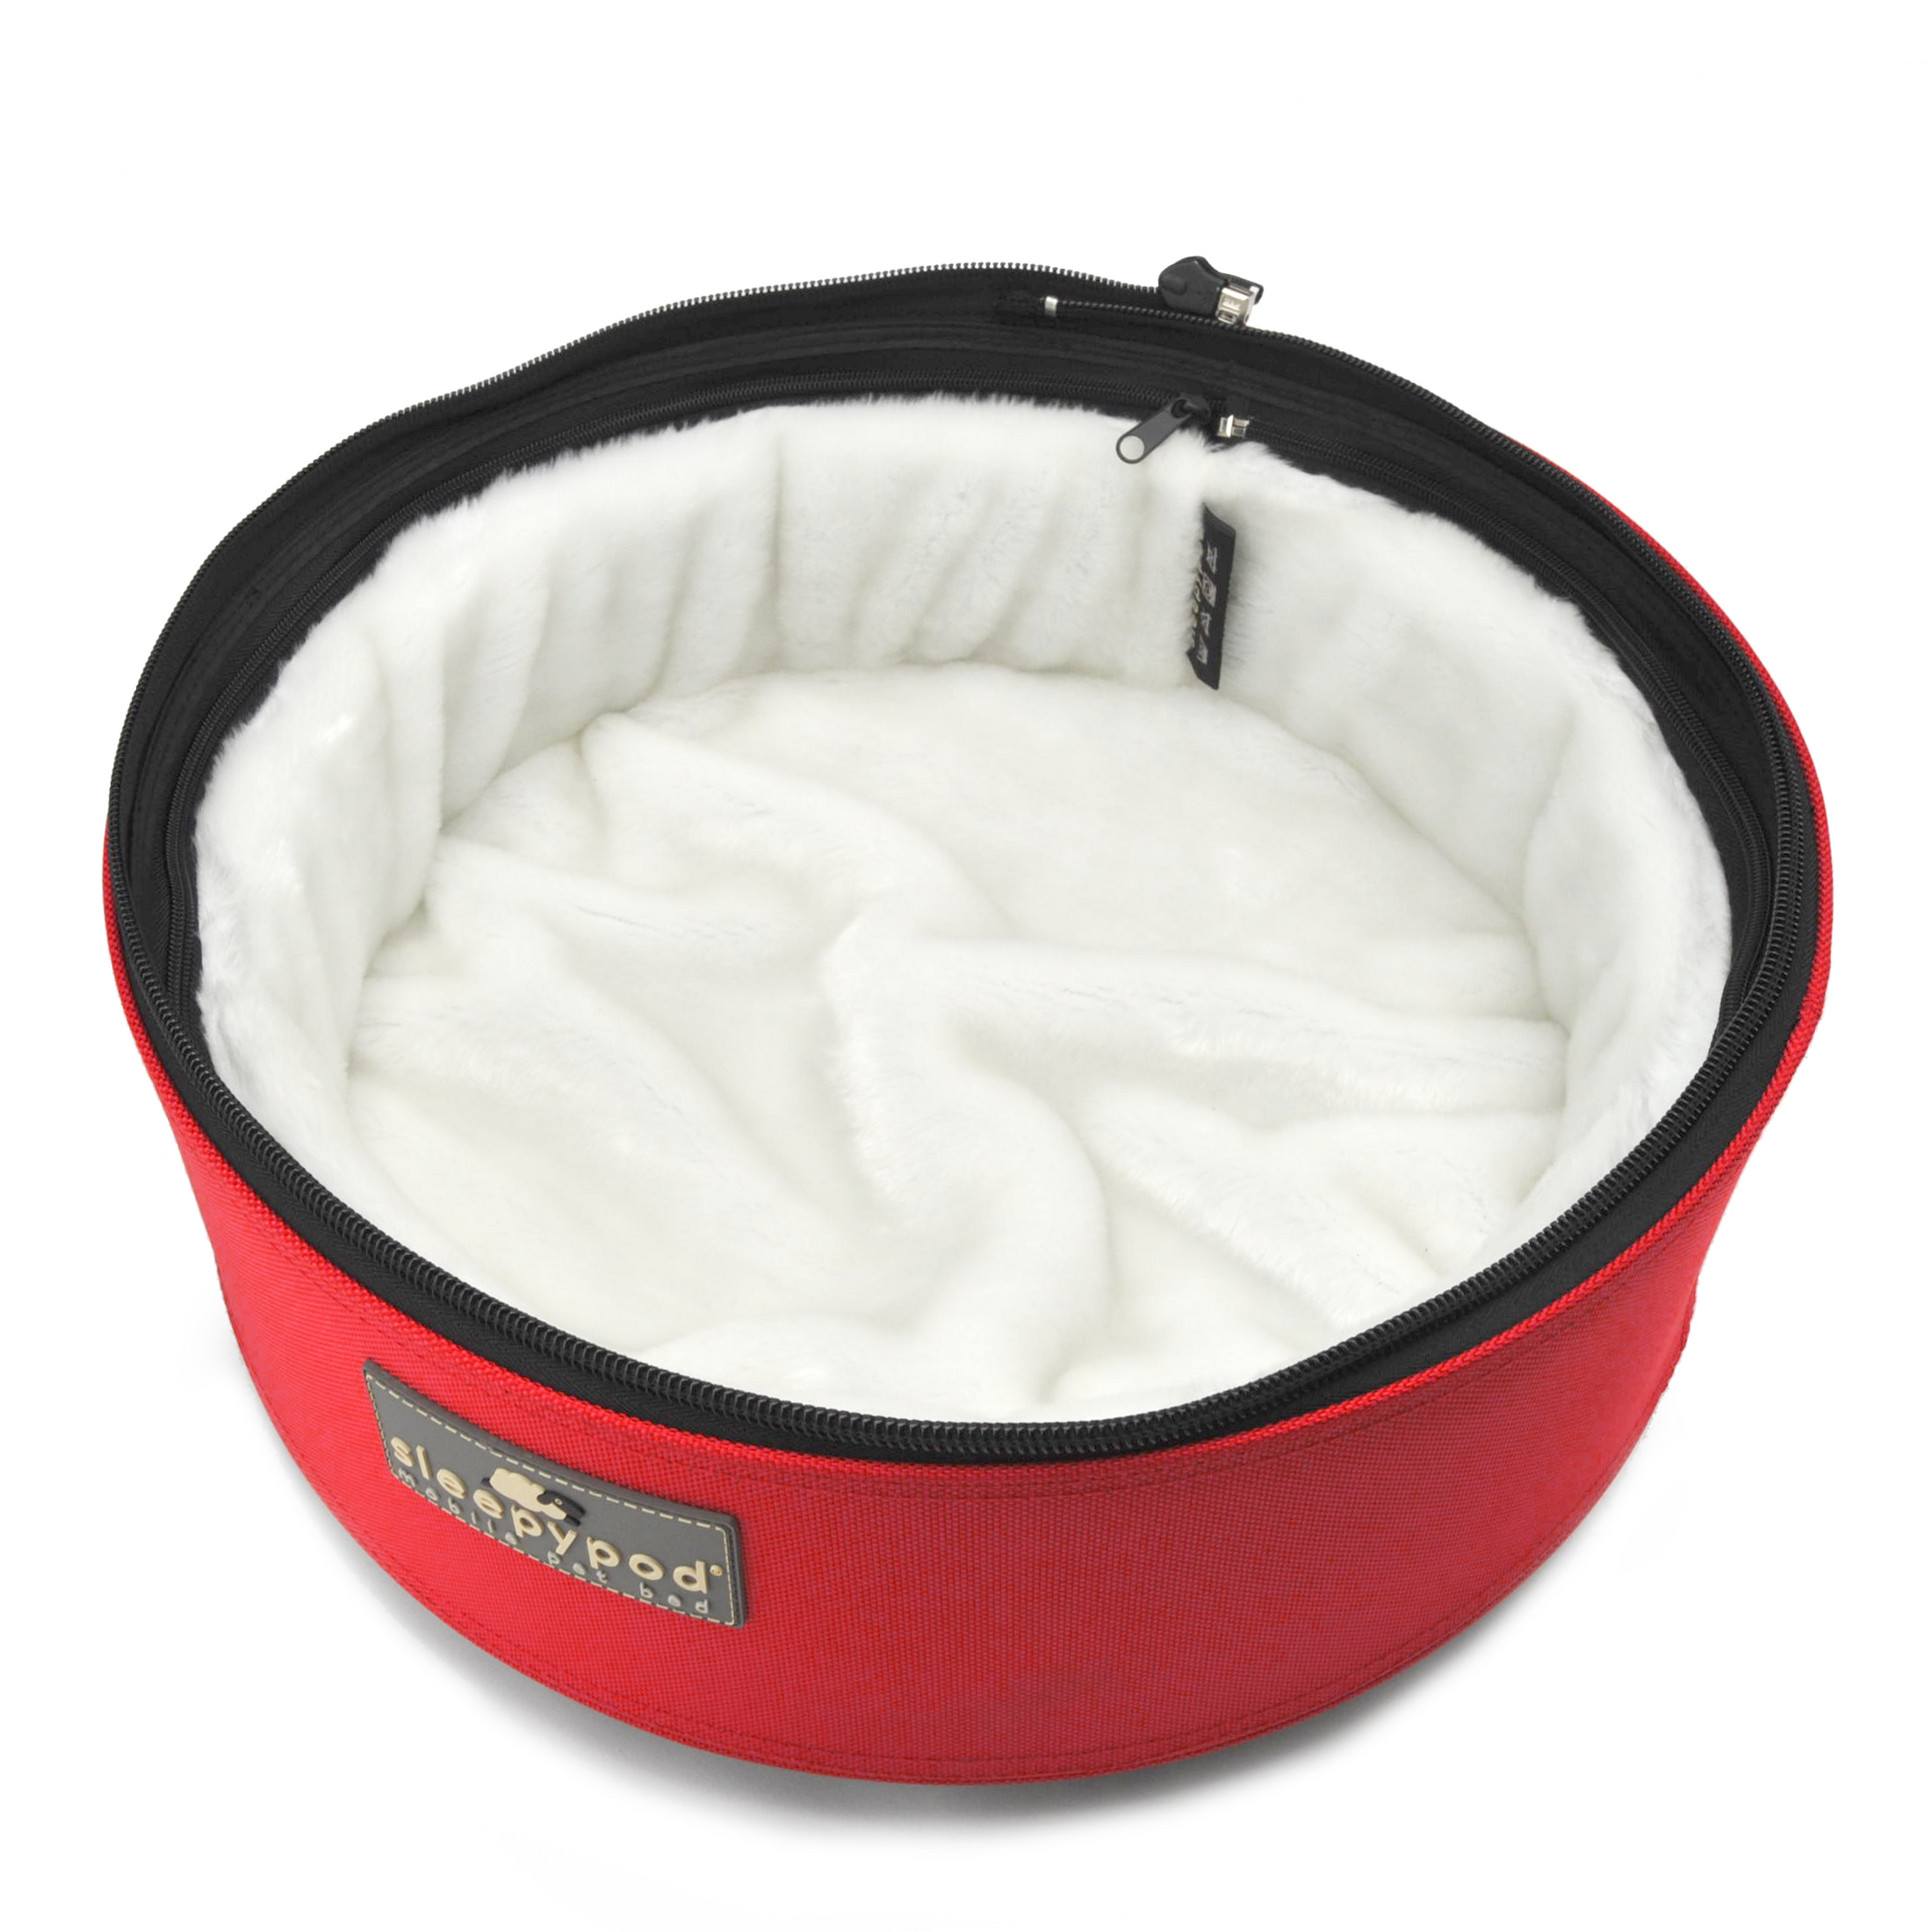 Sleepypod Mini - white Ultra Plush bedding (additional)